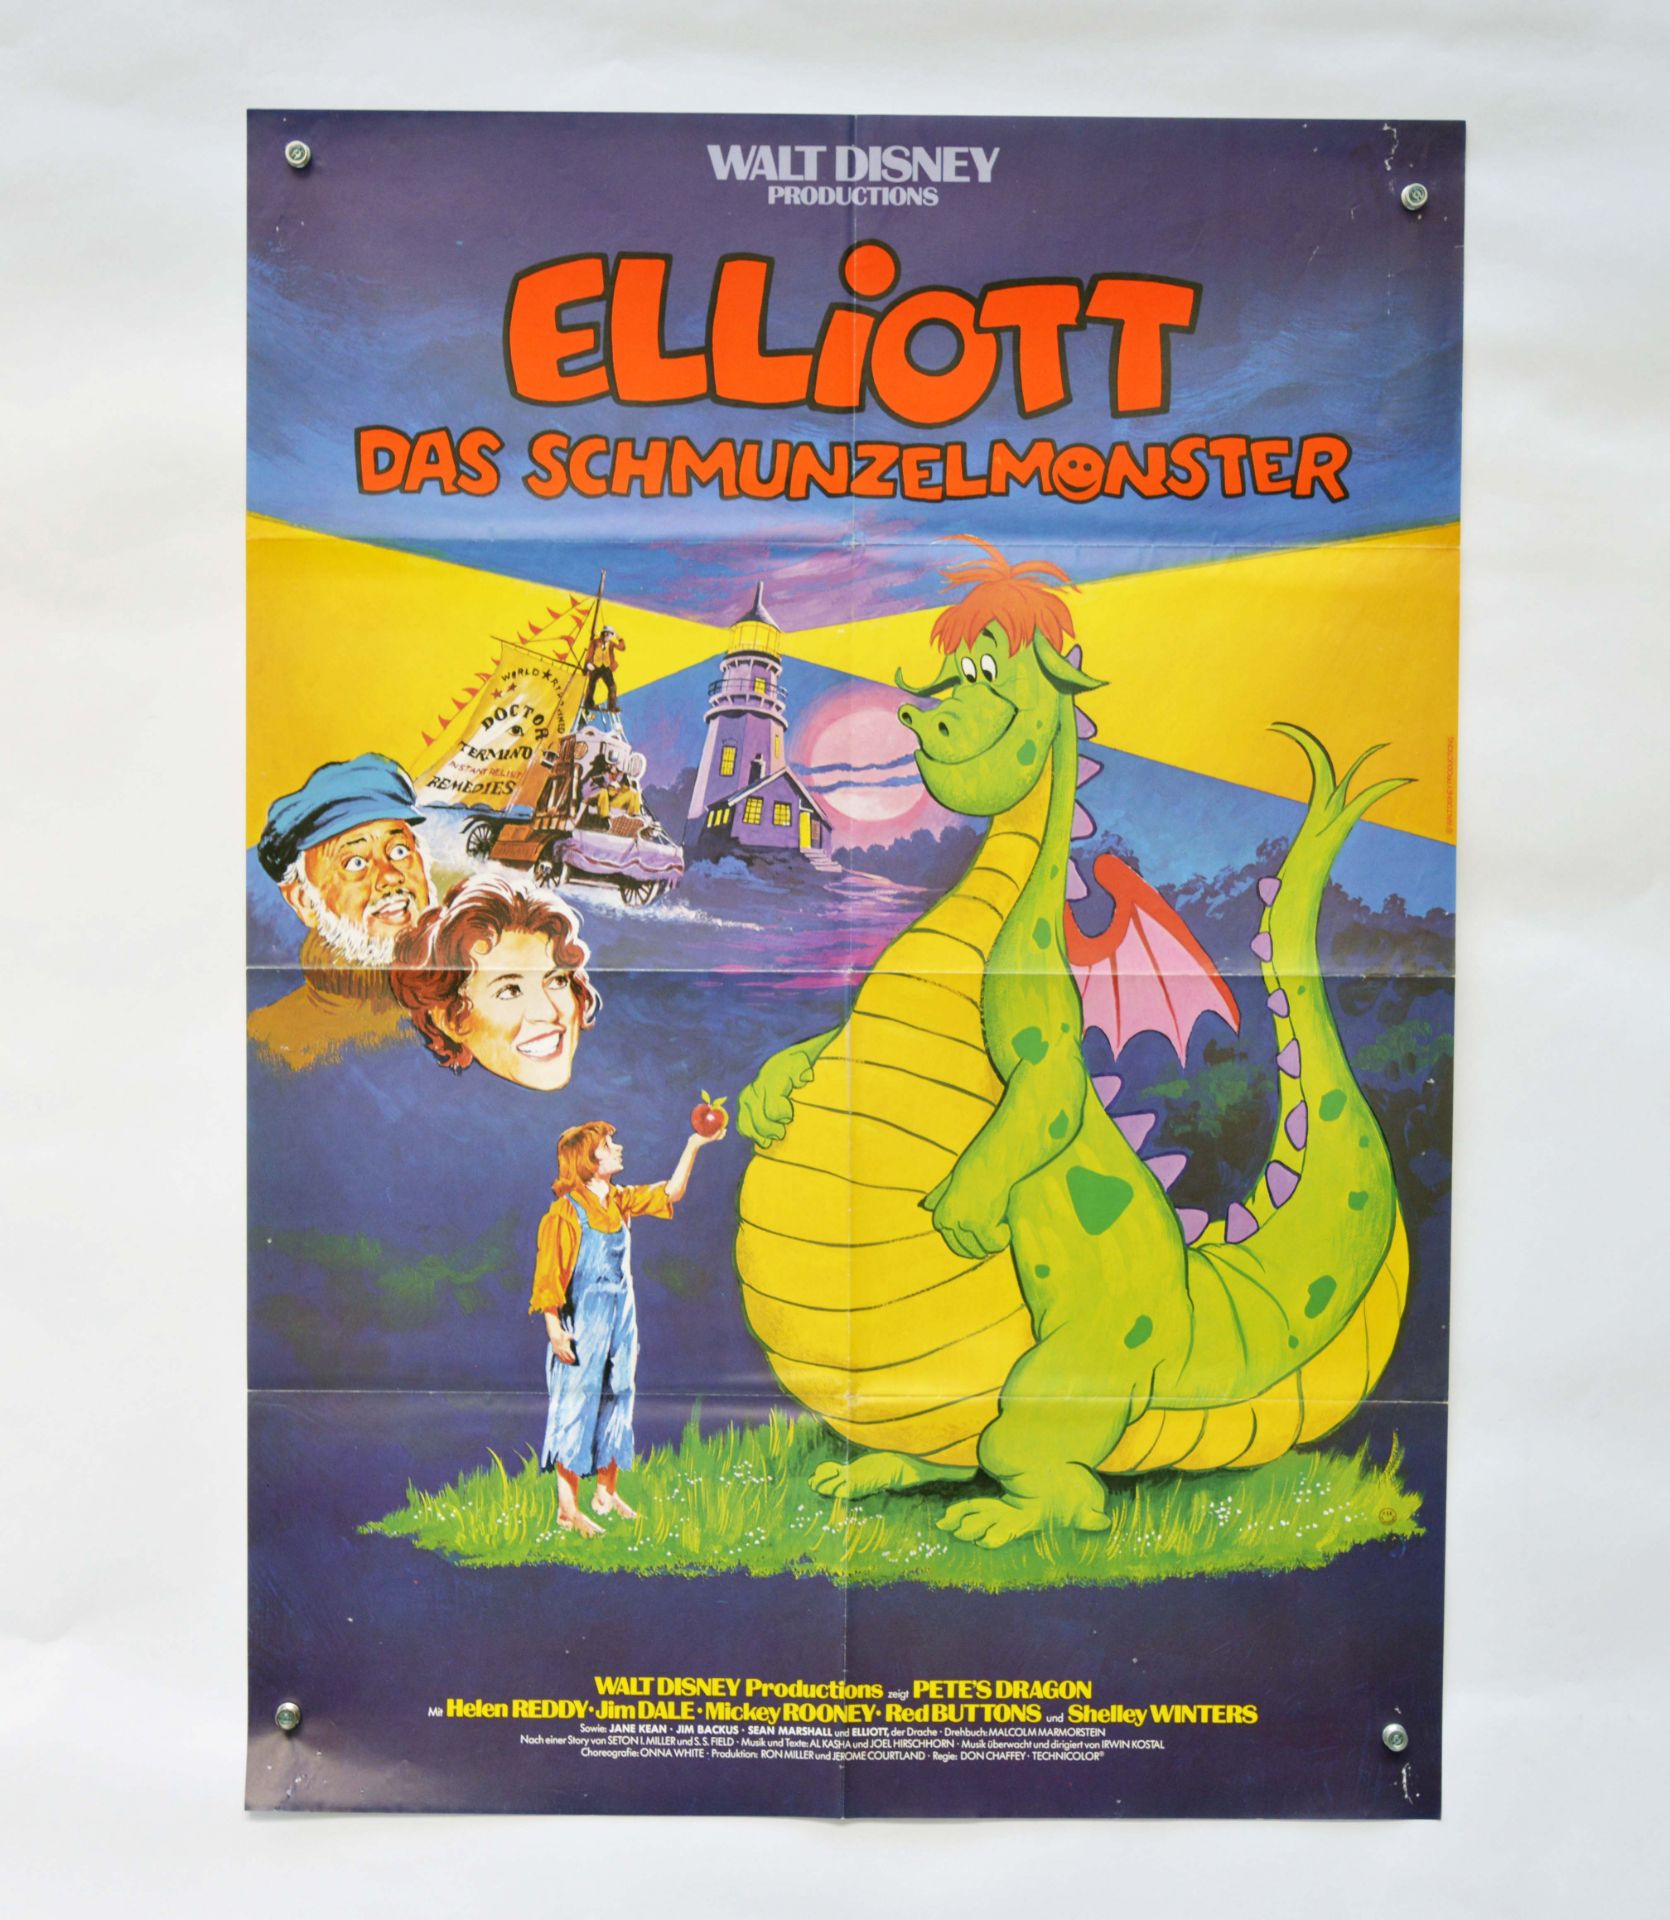 Film Poster "Elliott das Schmunzelmonster", folds, pinholes (torn)